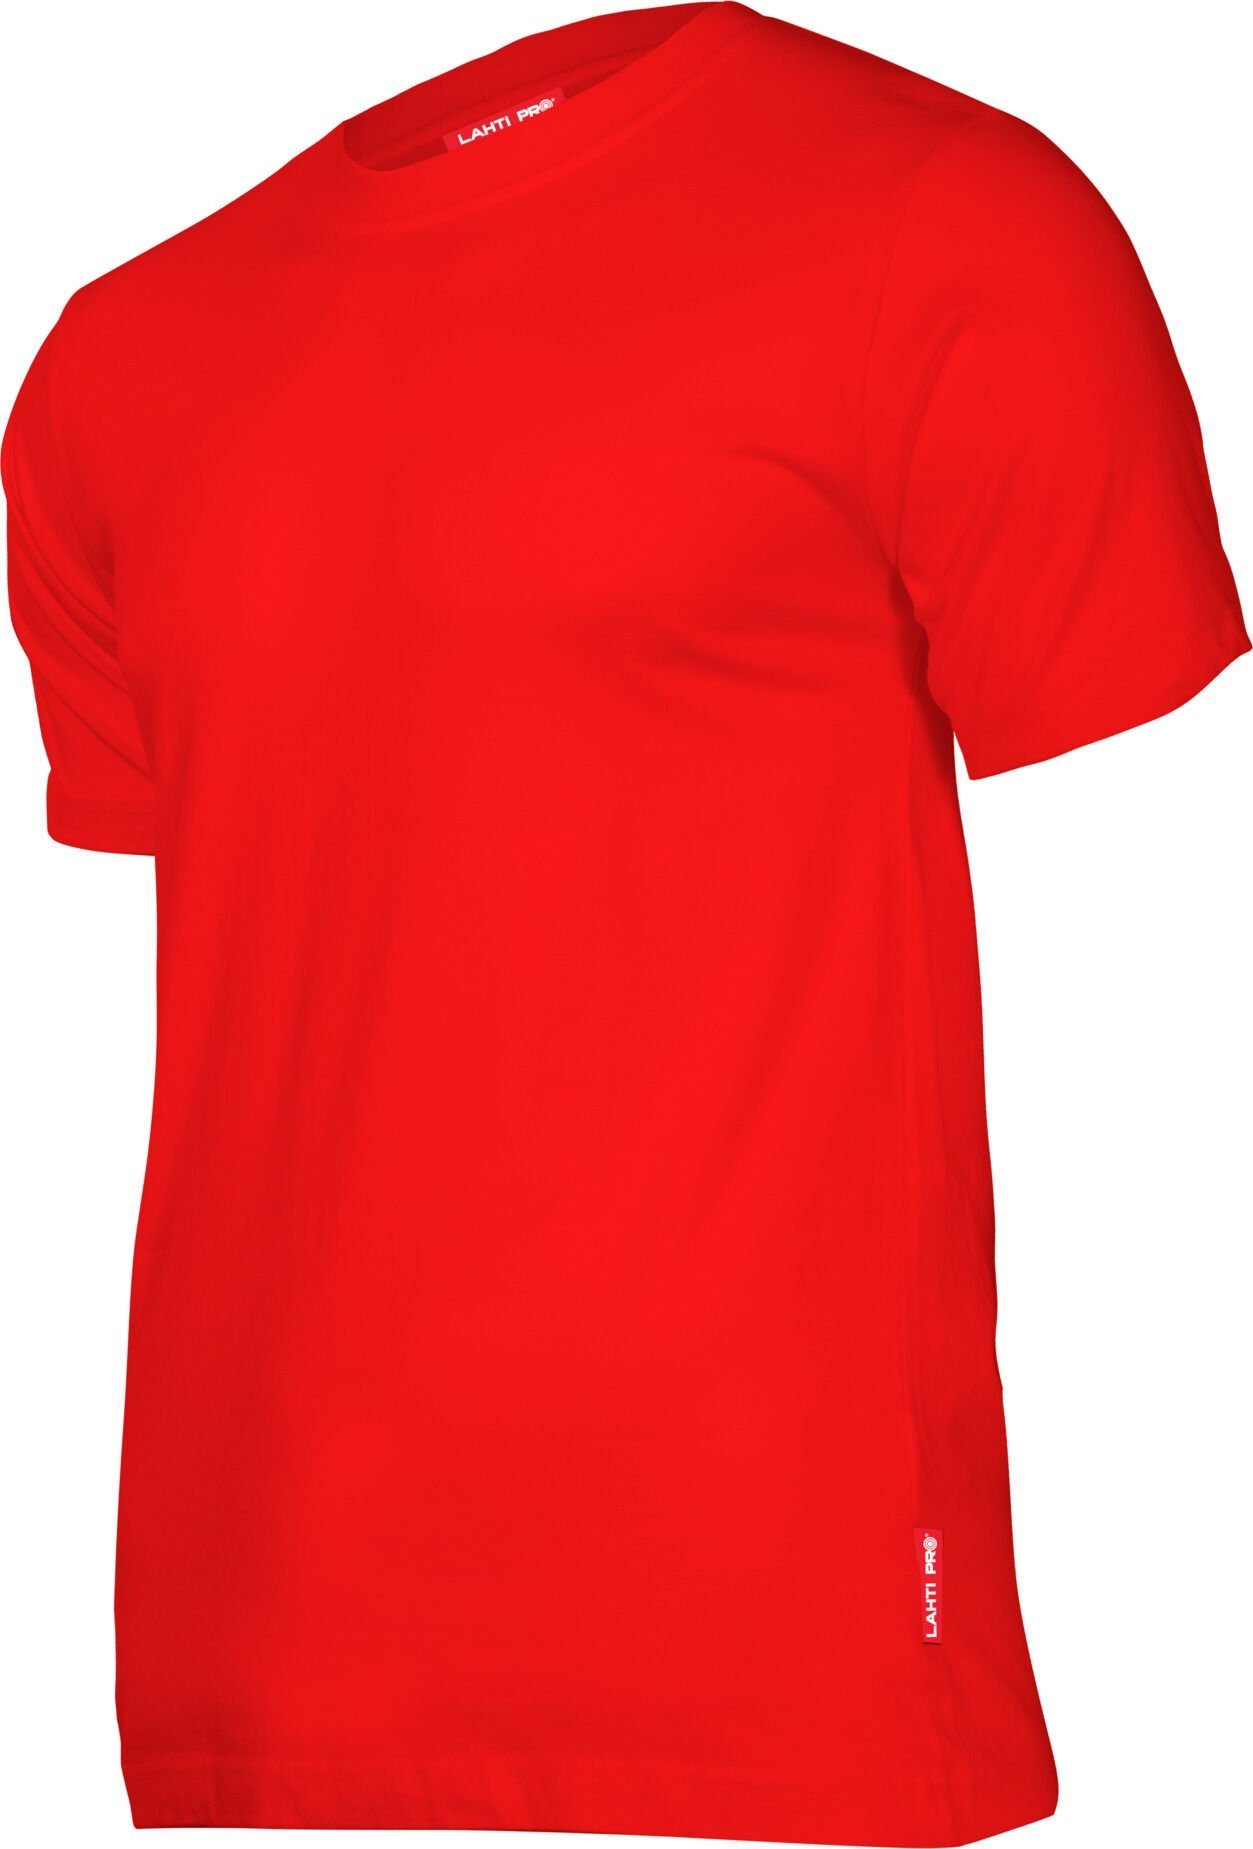 Lahti Pro Koszulka t-shirt 190g/m2, czerwona, 